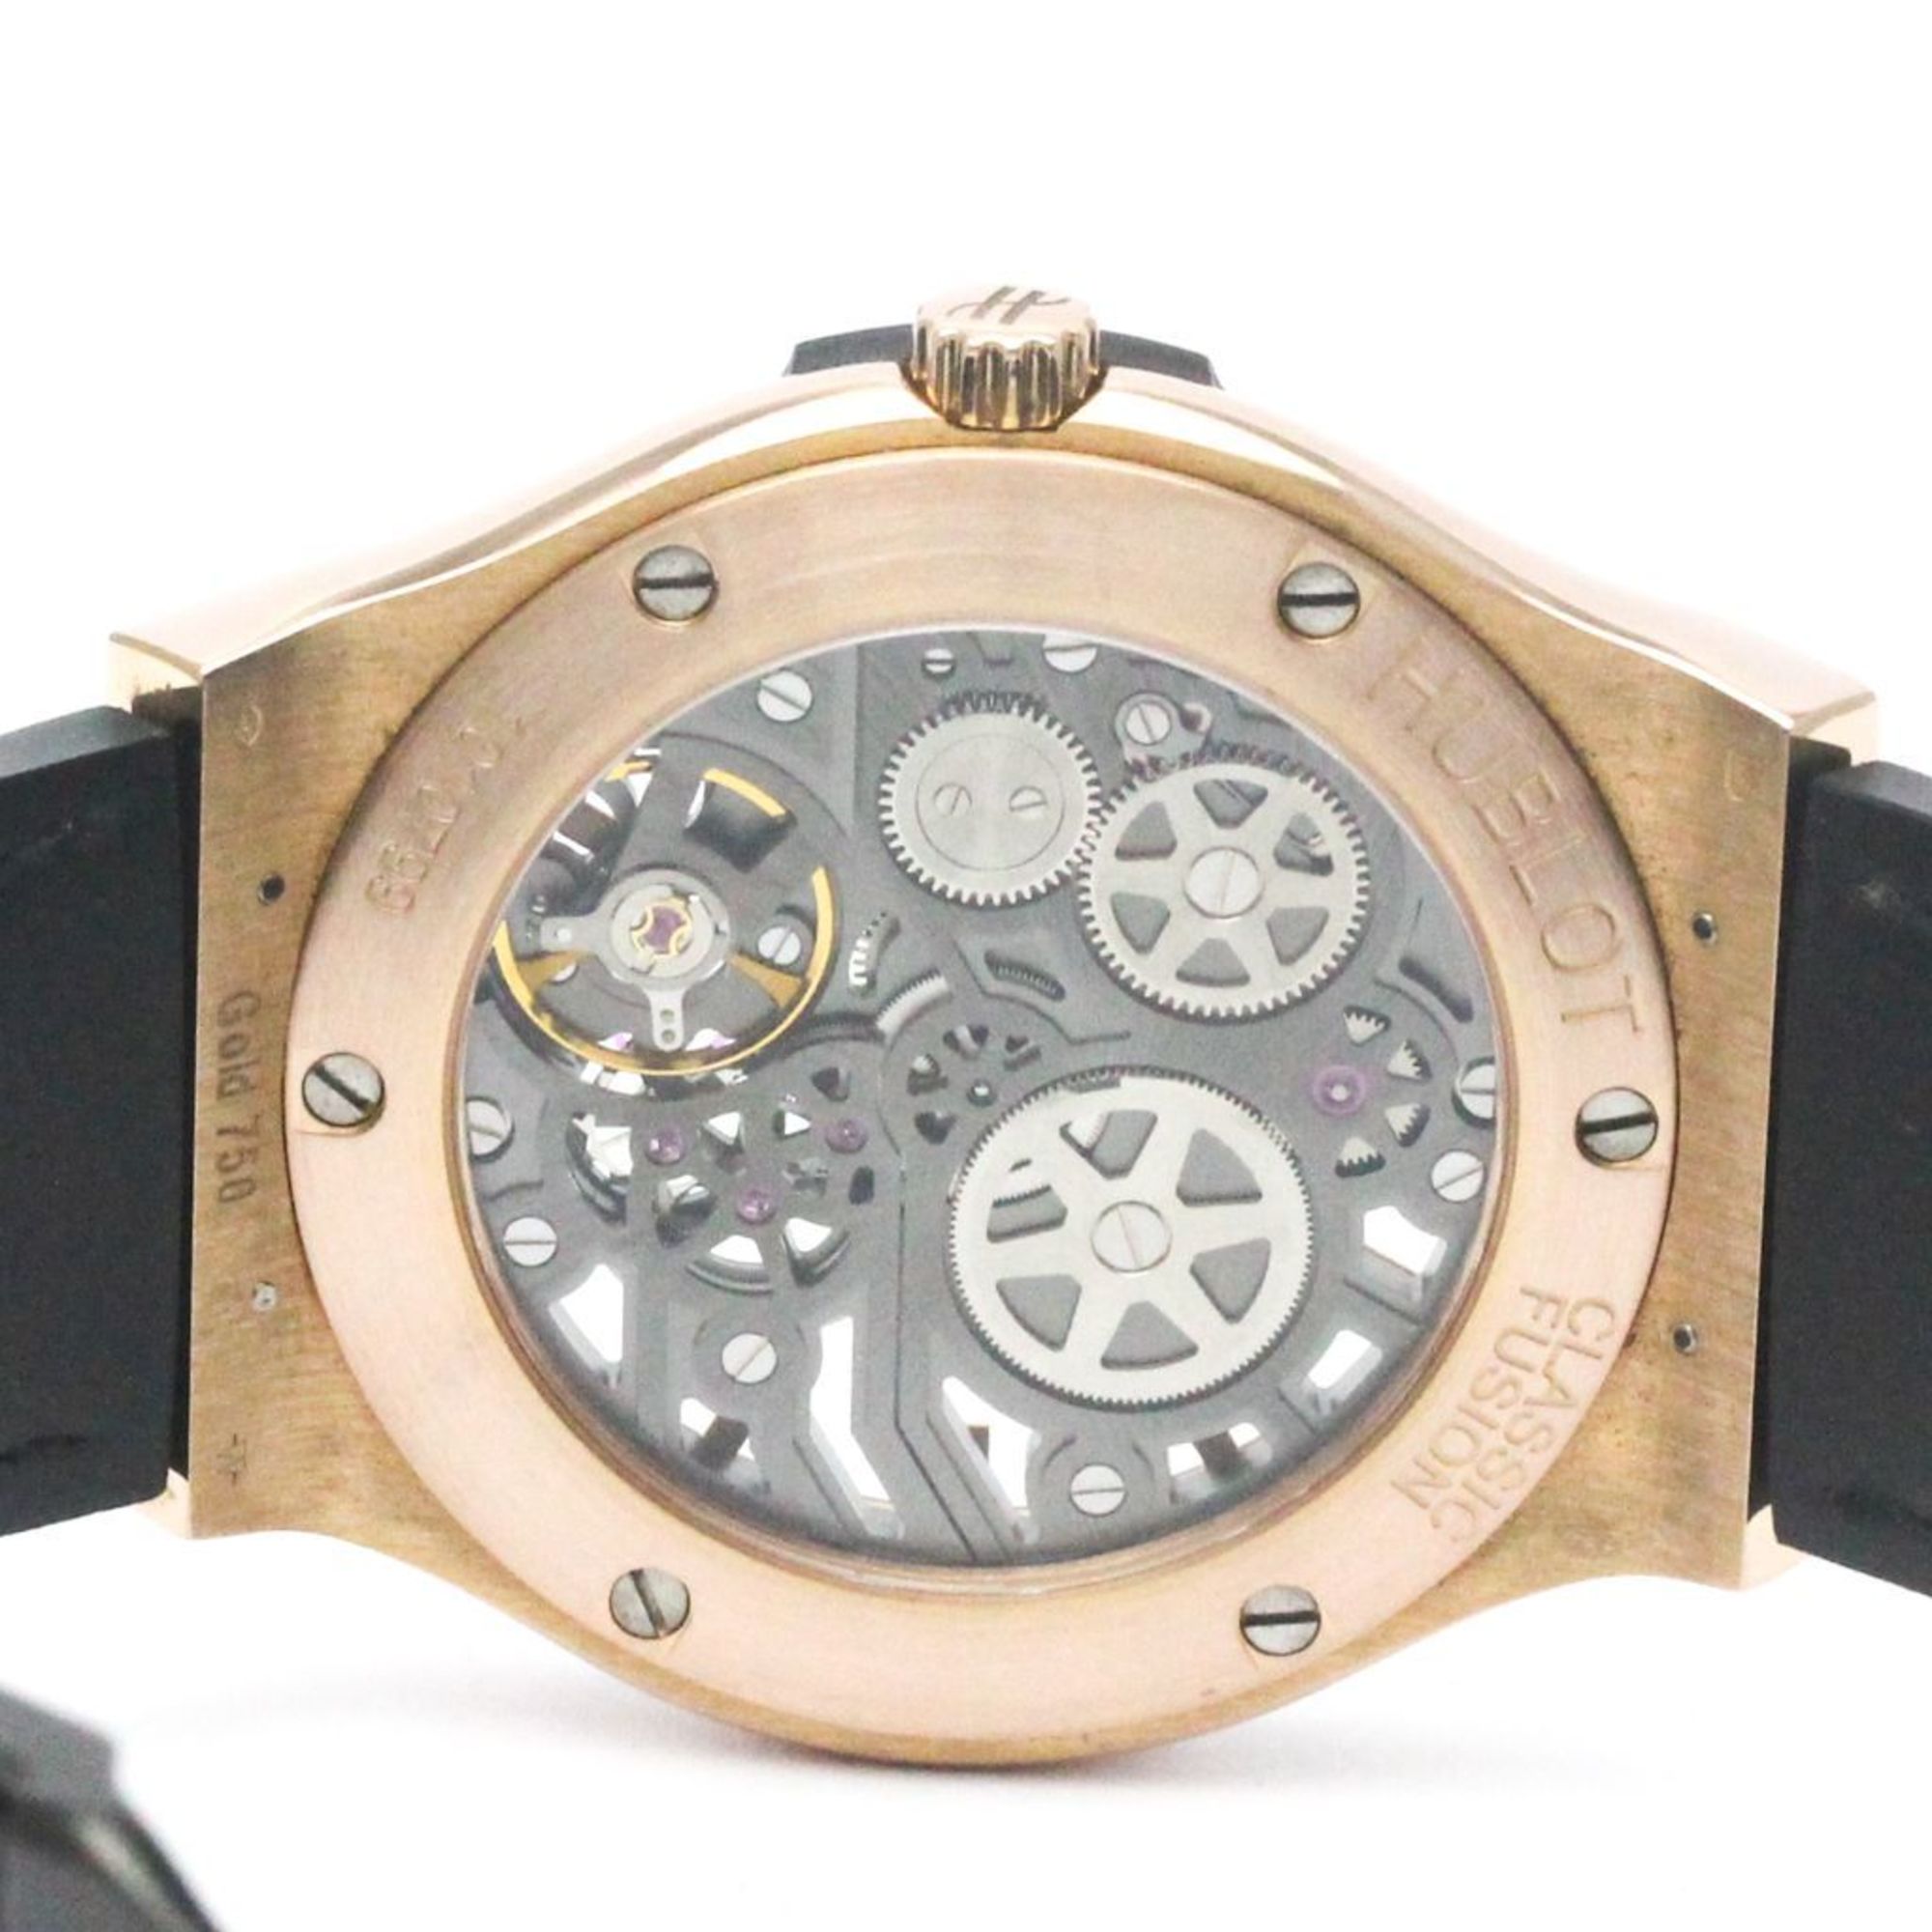 HUBLOT Classic Fusion Ultra-Thin 18K Pink Gold Watch 545.OX.0180.LR BF568476